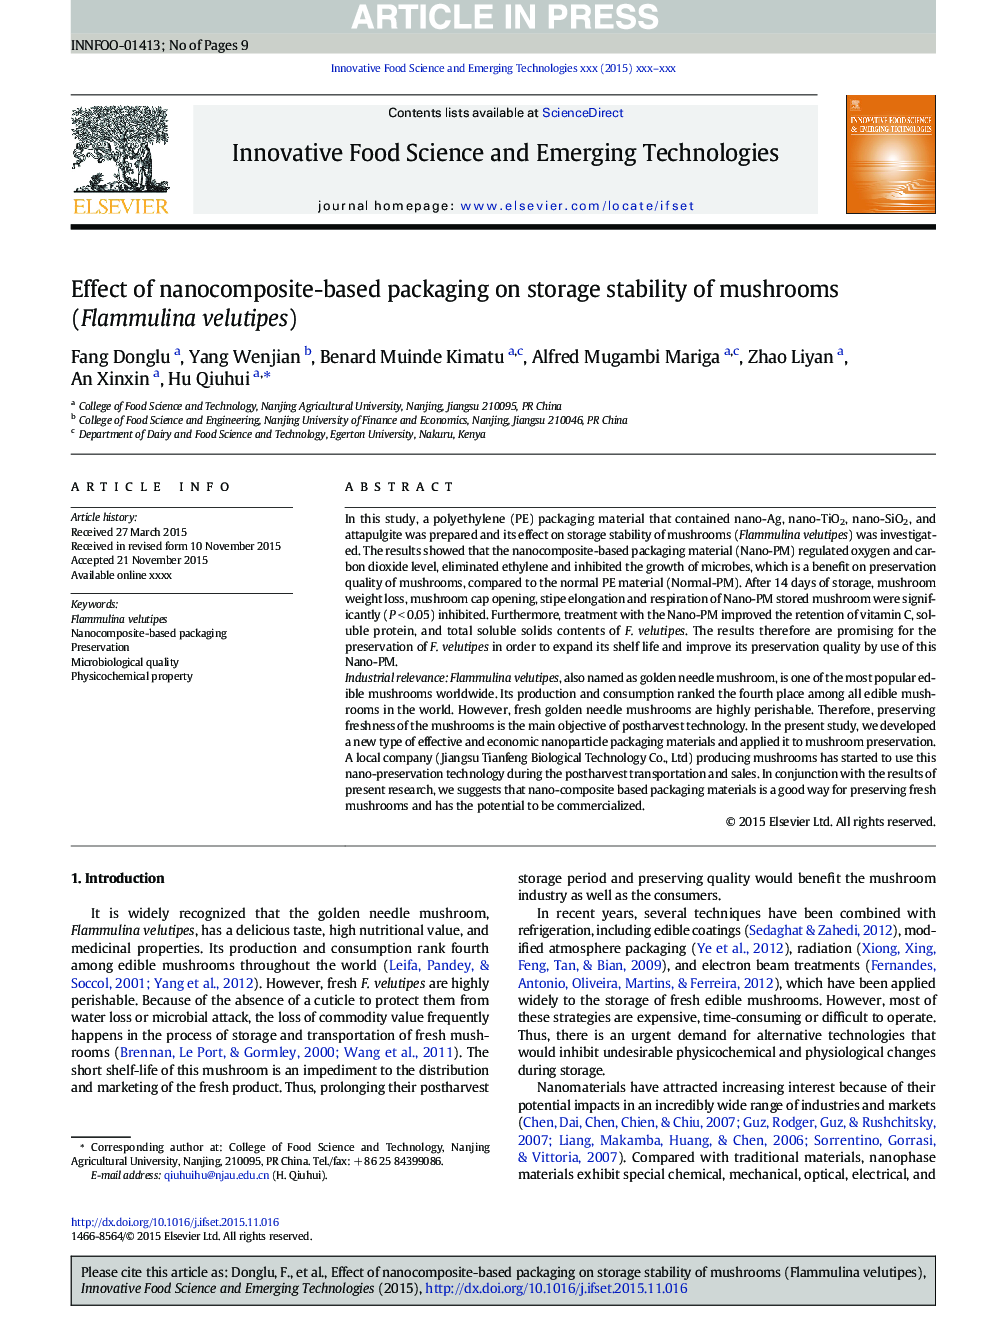 Effect of nanocomposite-based packaging on storage stability of mushrooms (Flammulina velutipes)